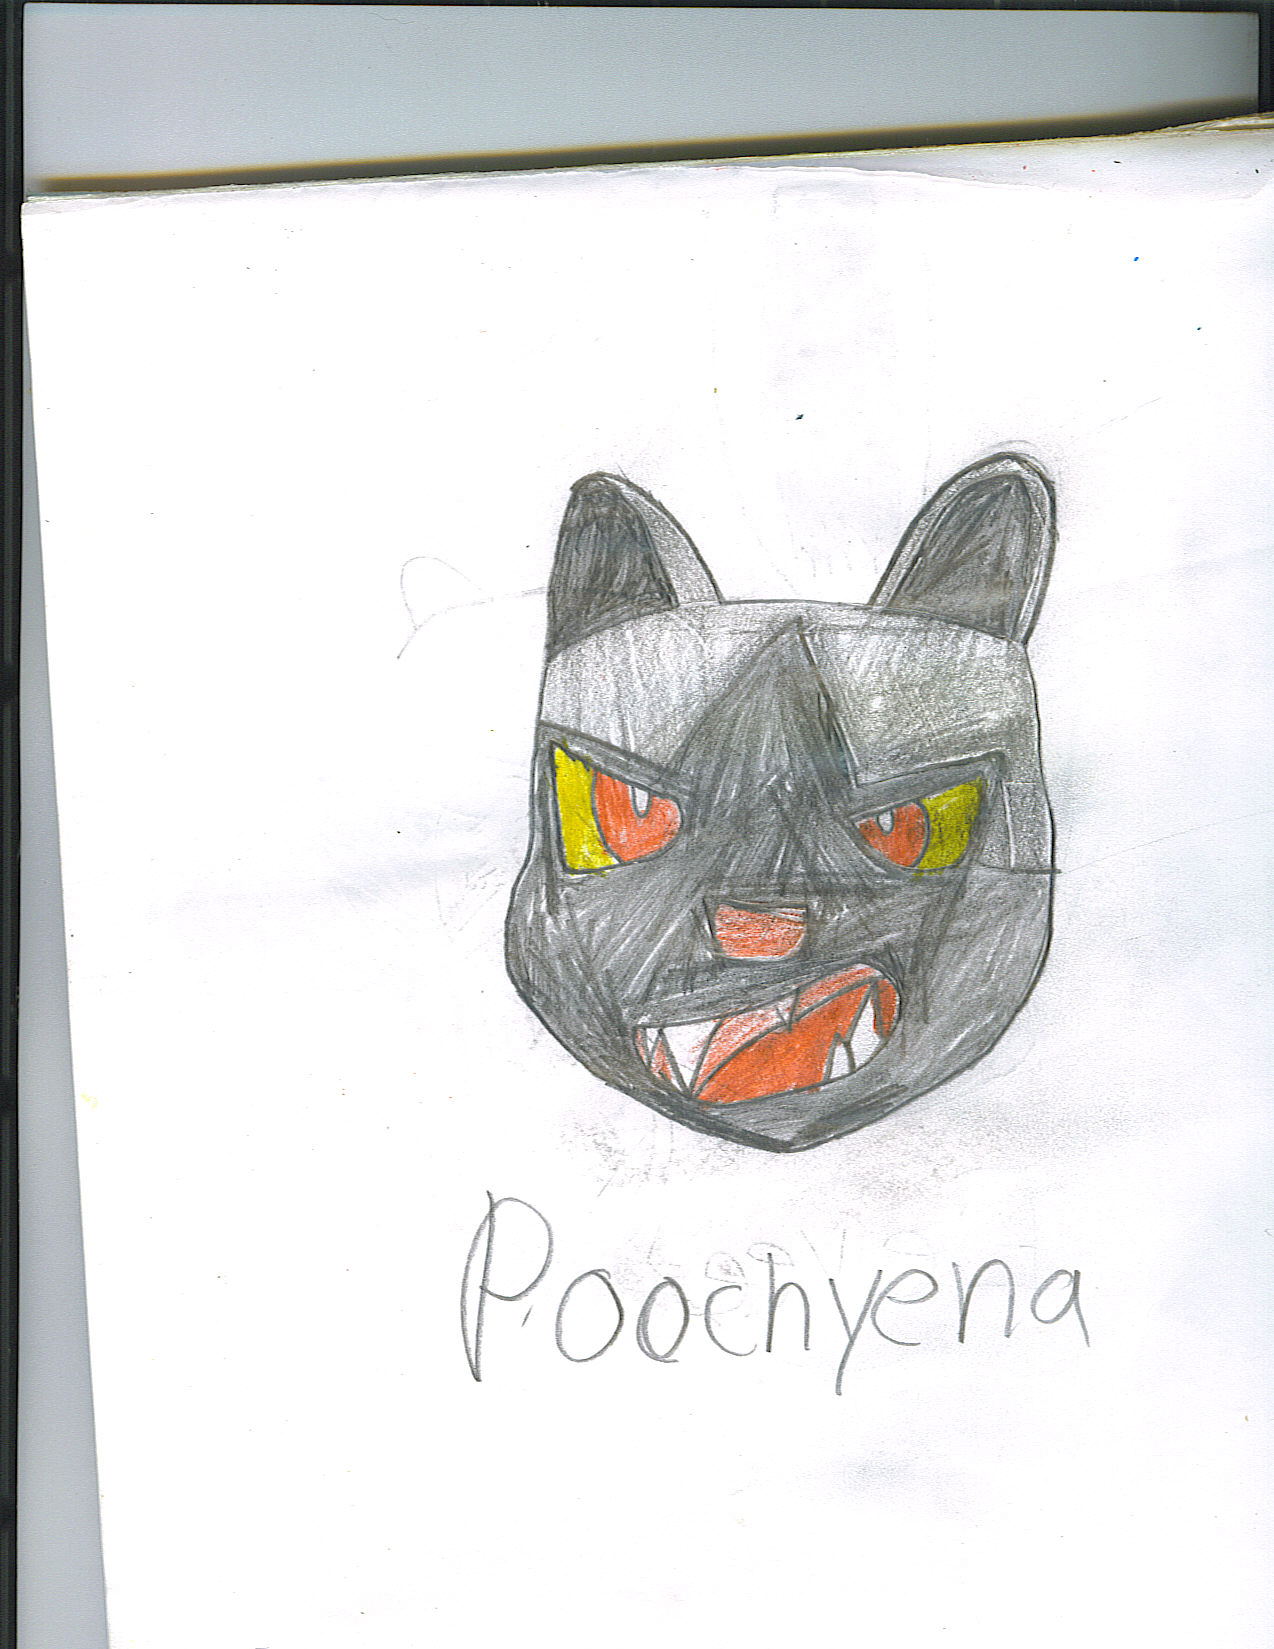 Poochyena by yumisatare11